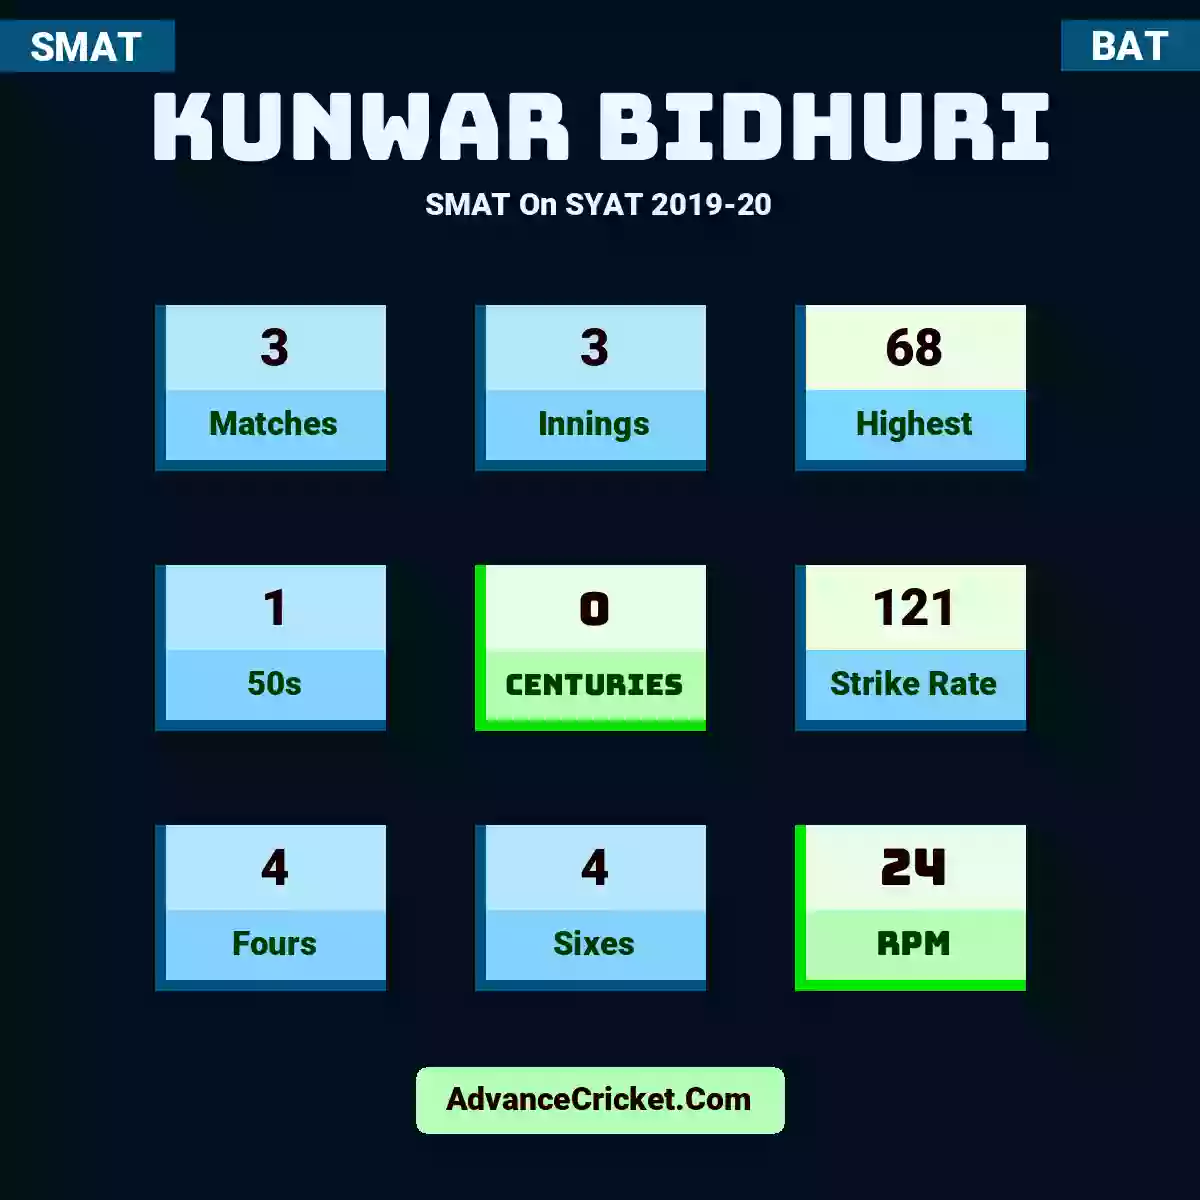 Kunwar Bidhuri SMAT  On SYAT 2019-20, Kunwar Bidhuri played 3 matches, scored 68 runs as highest, 1 half-centuries, and 0 centuries, with a strike rate of 121. K.Bidhuri hit 4 fours and 4 sixes, with an RPM of 24.